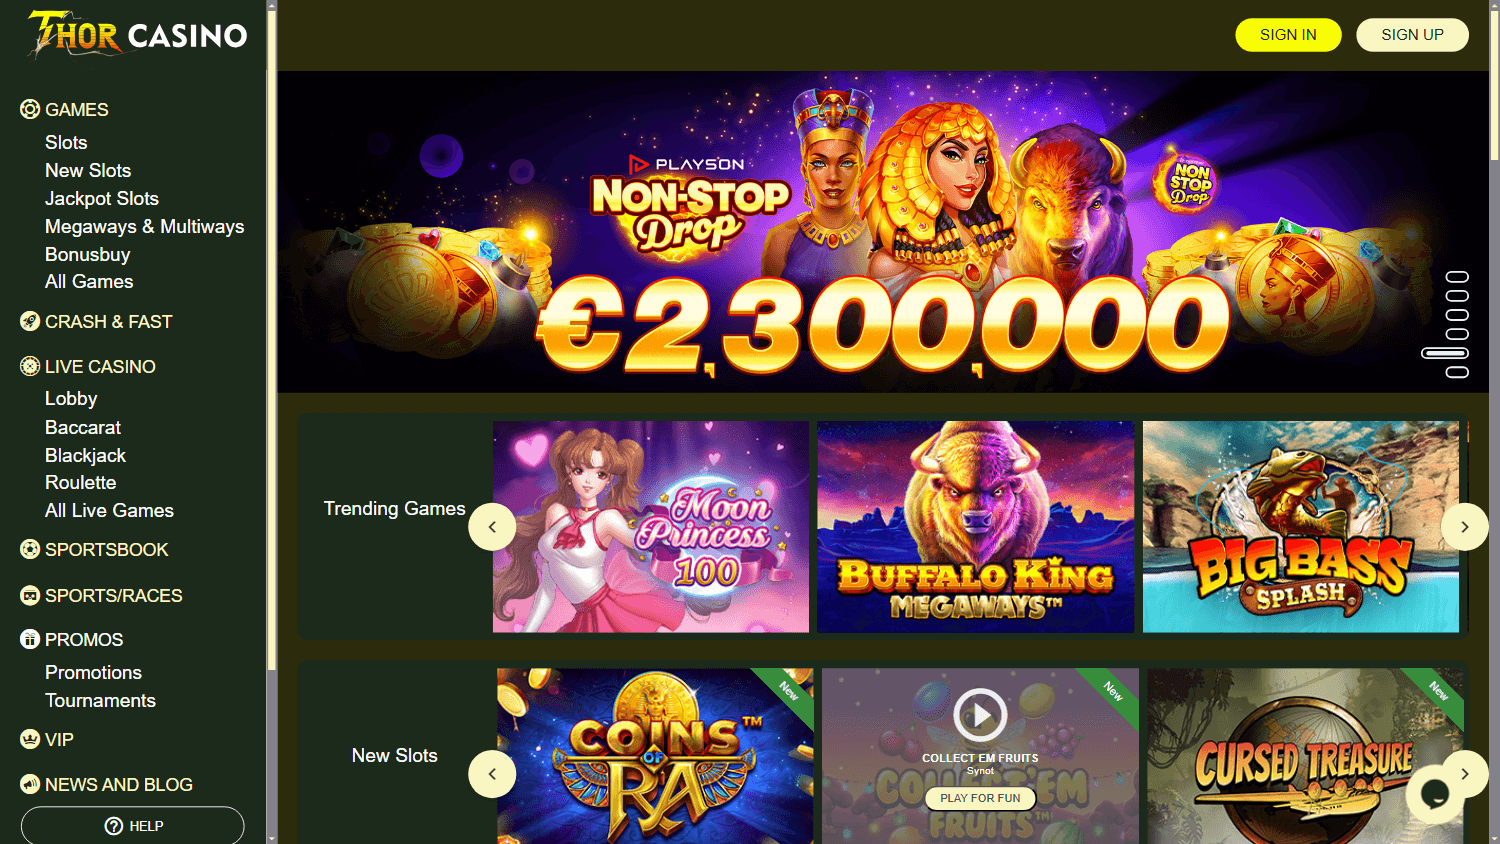 thor_casino_homepage_desktop